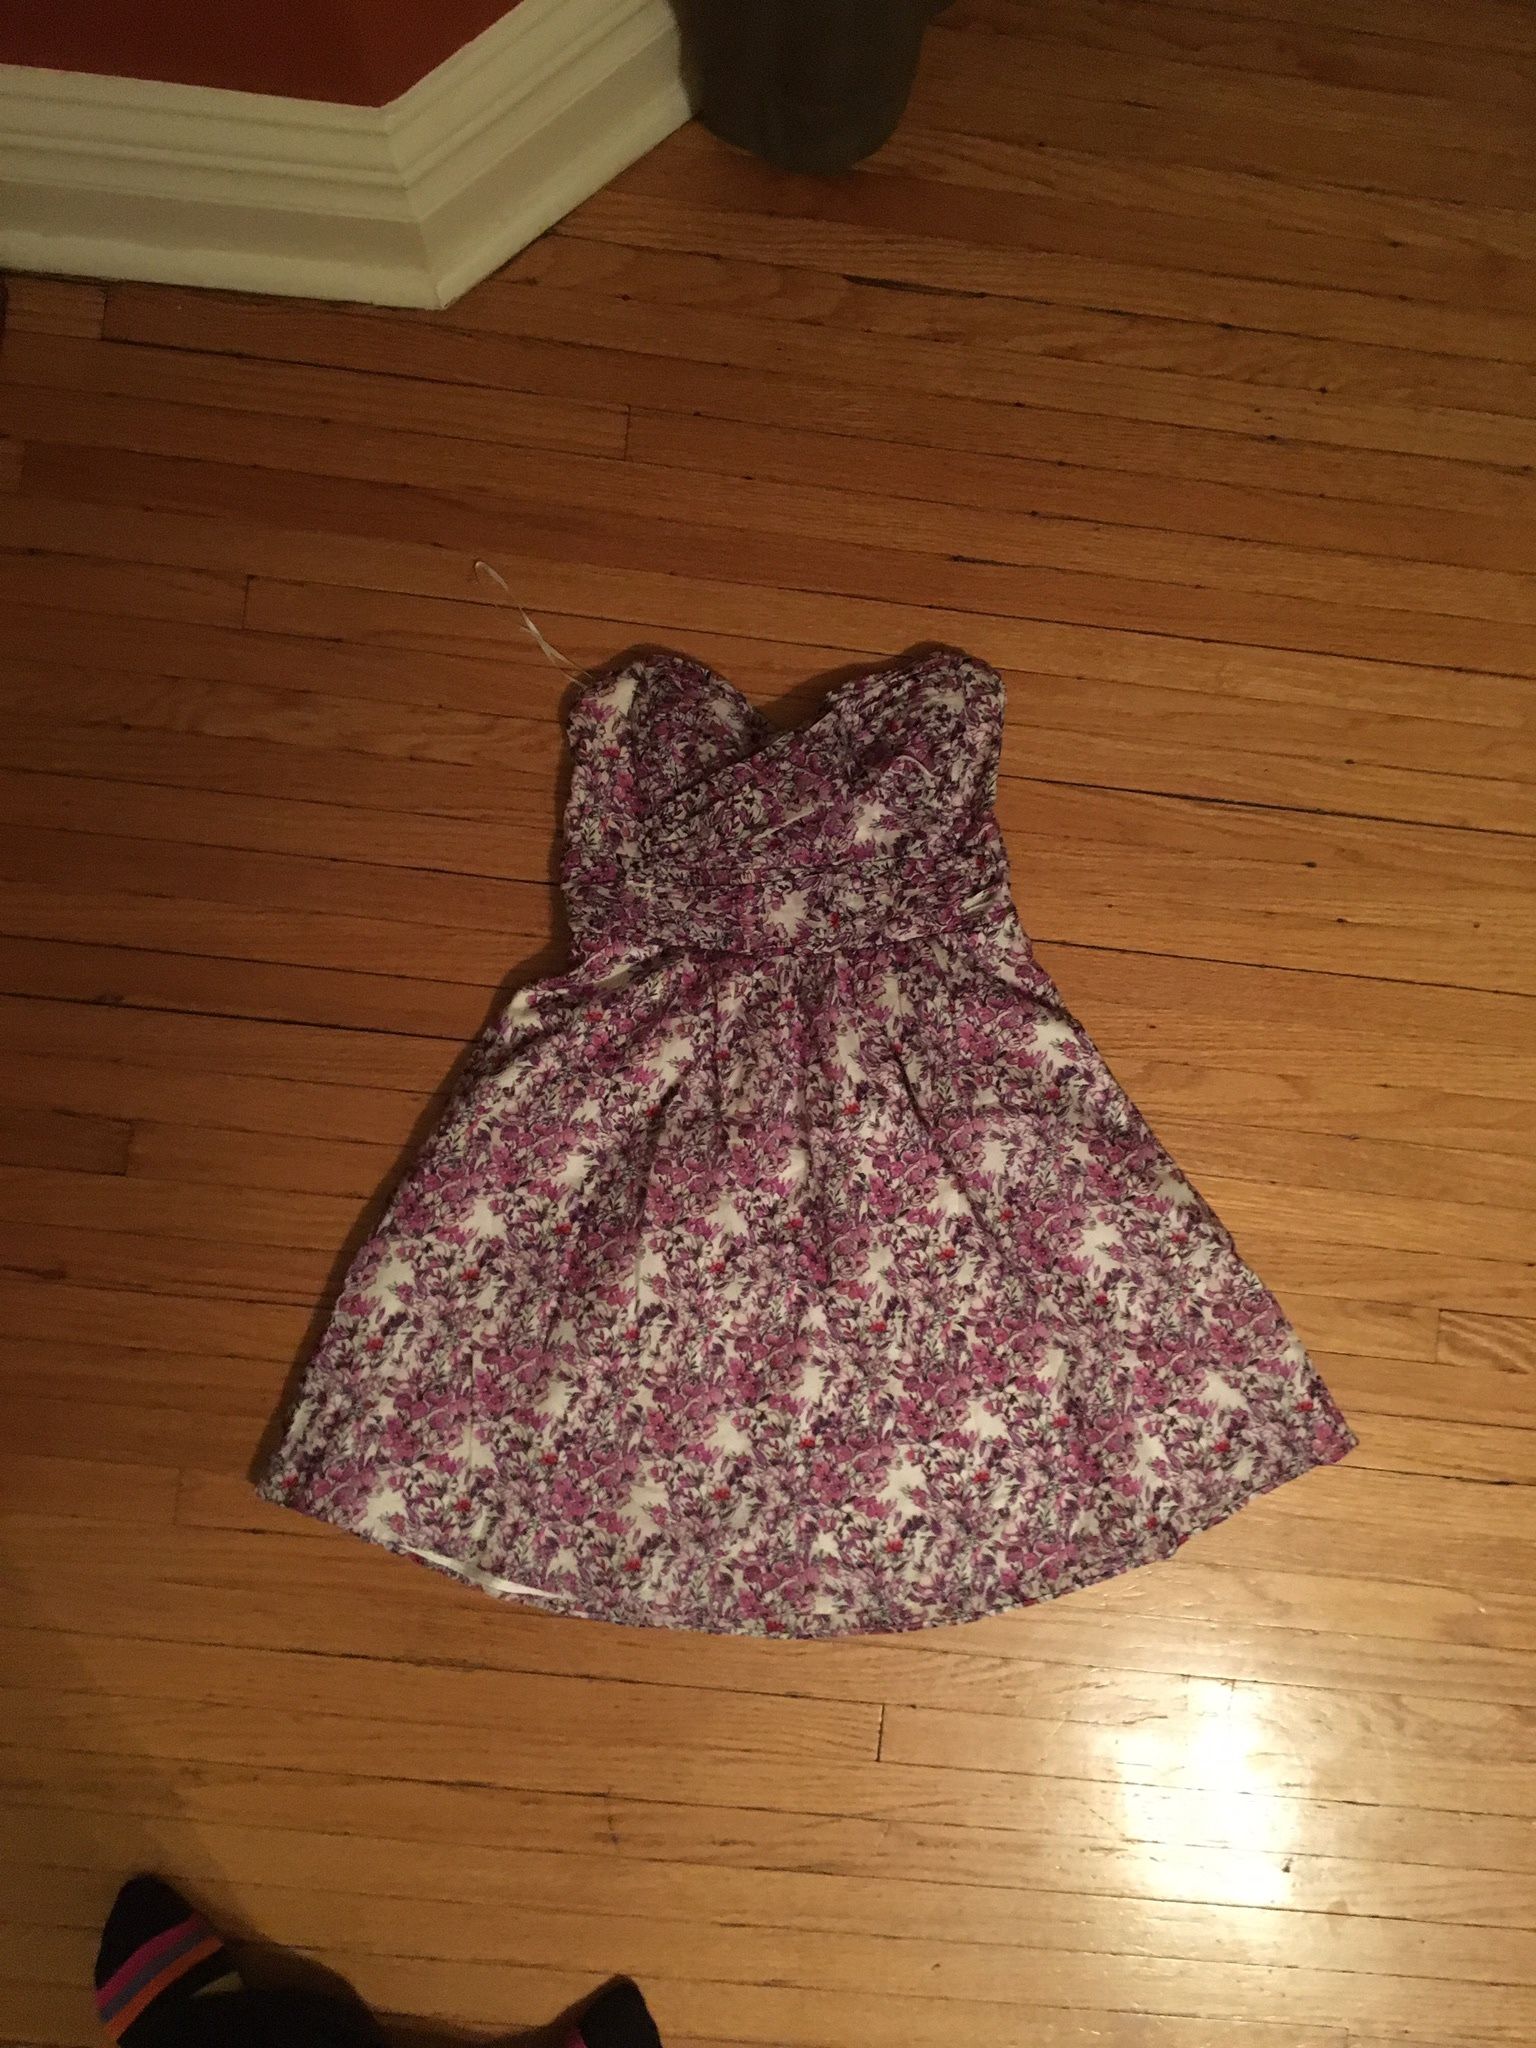 Express strapless floral dress. Size 2